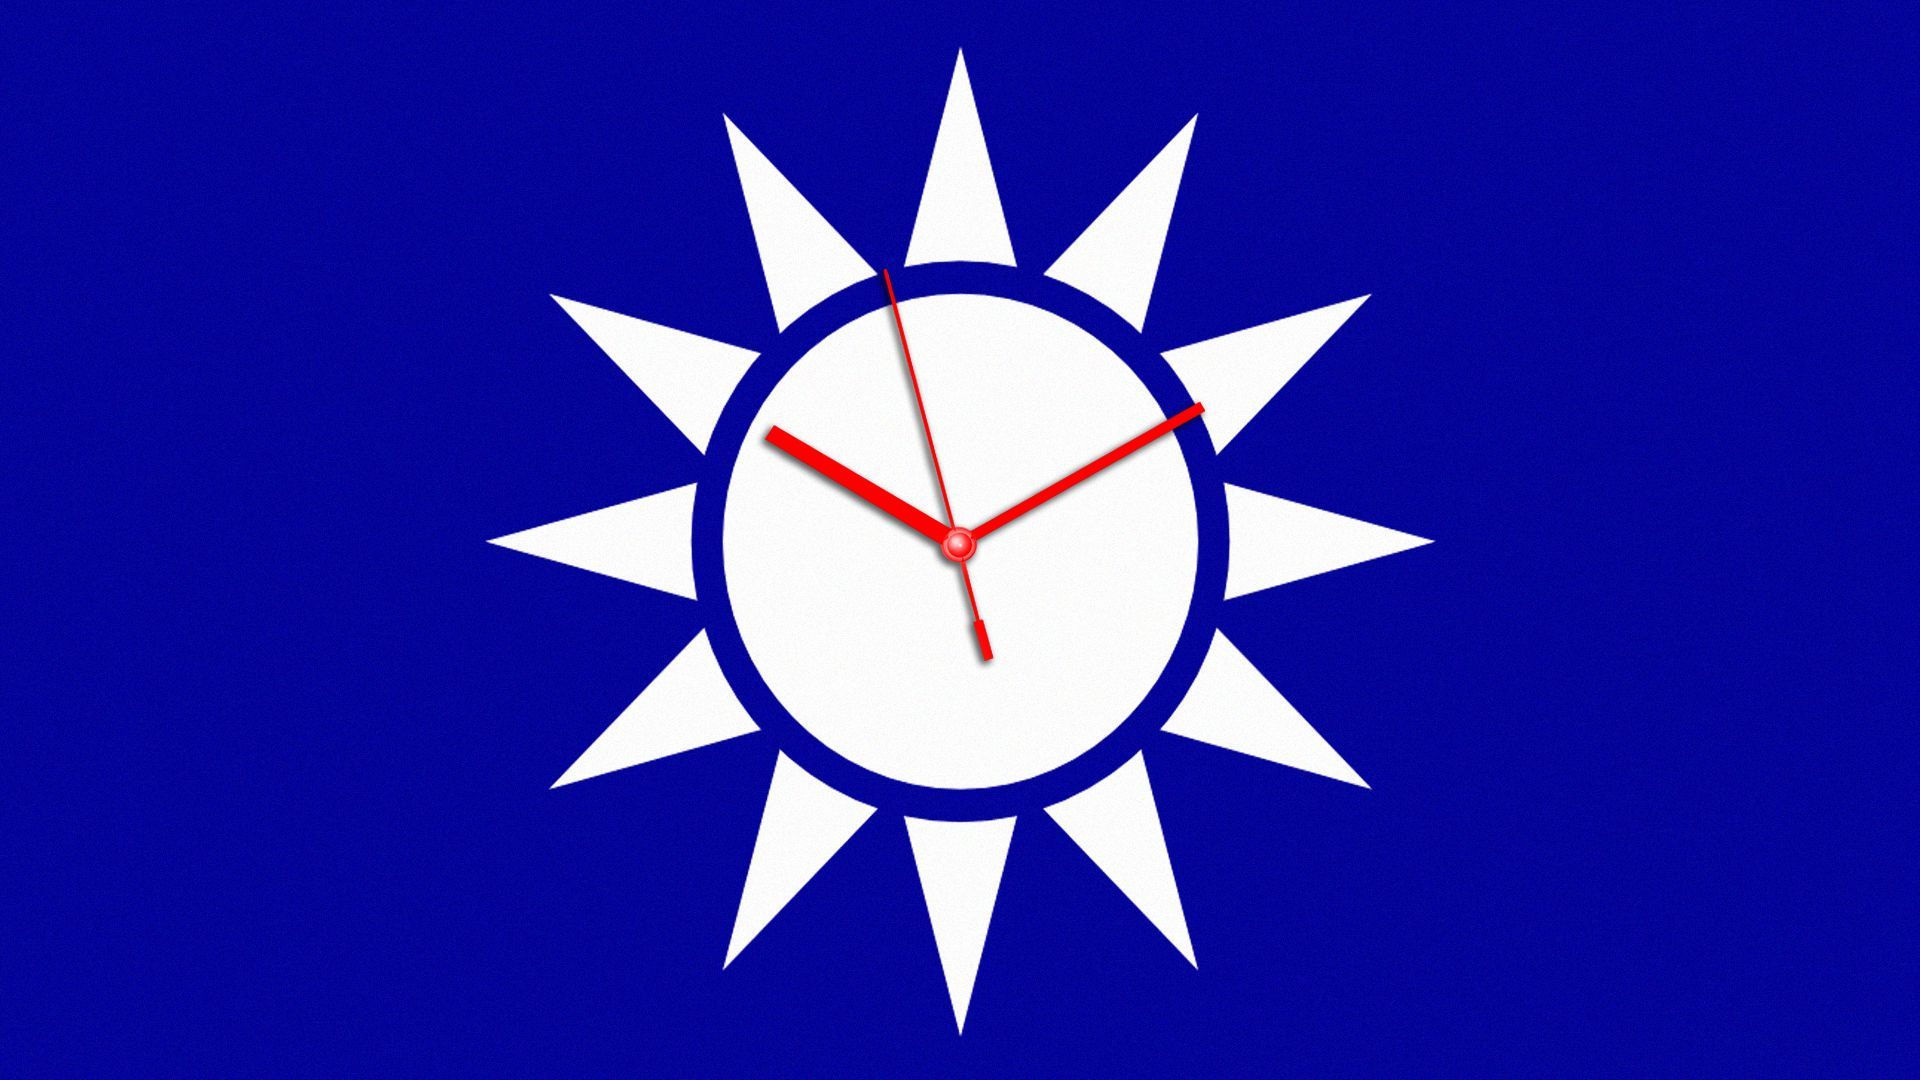 Illustration of Taiwan's flag symbol as a clockface